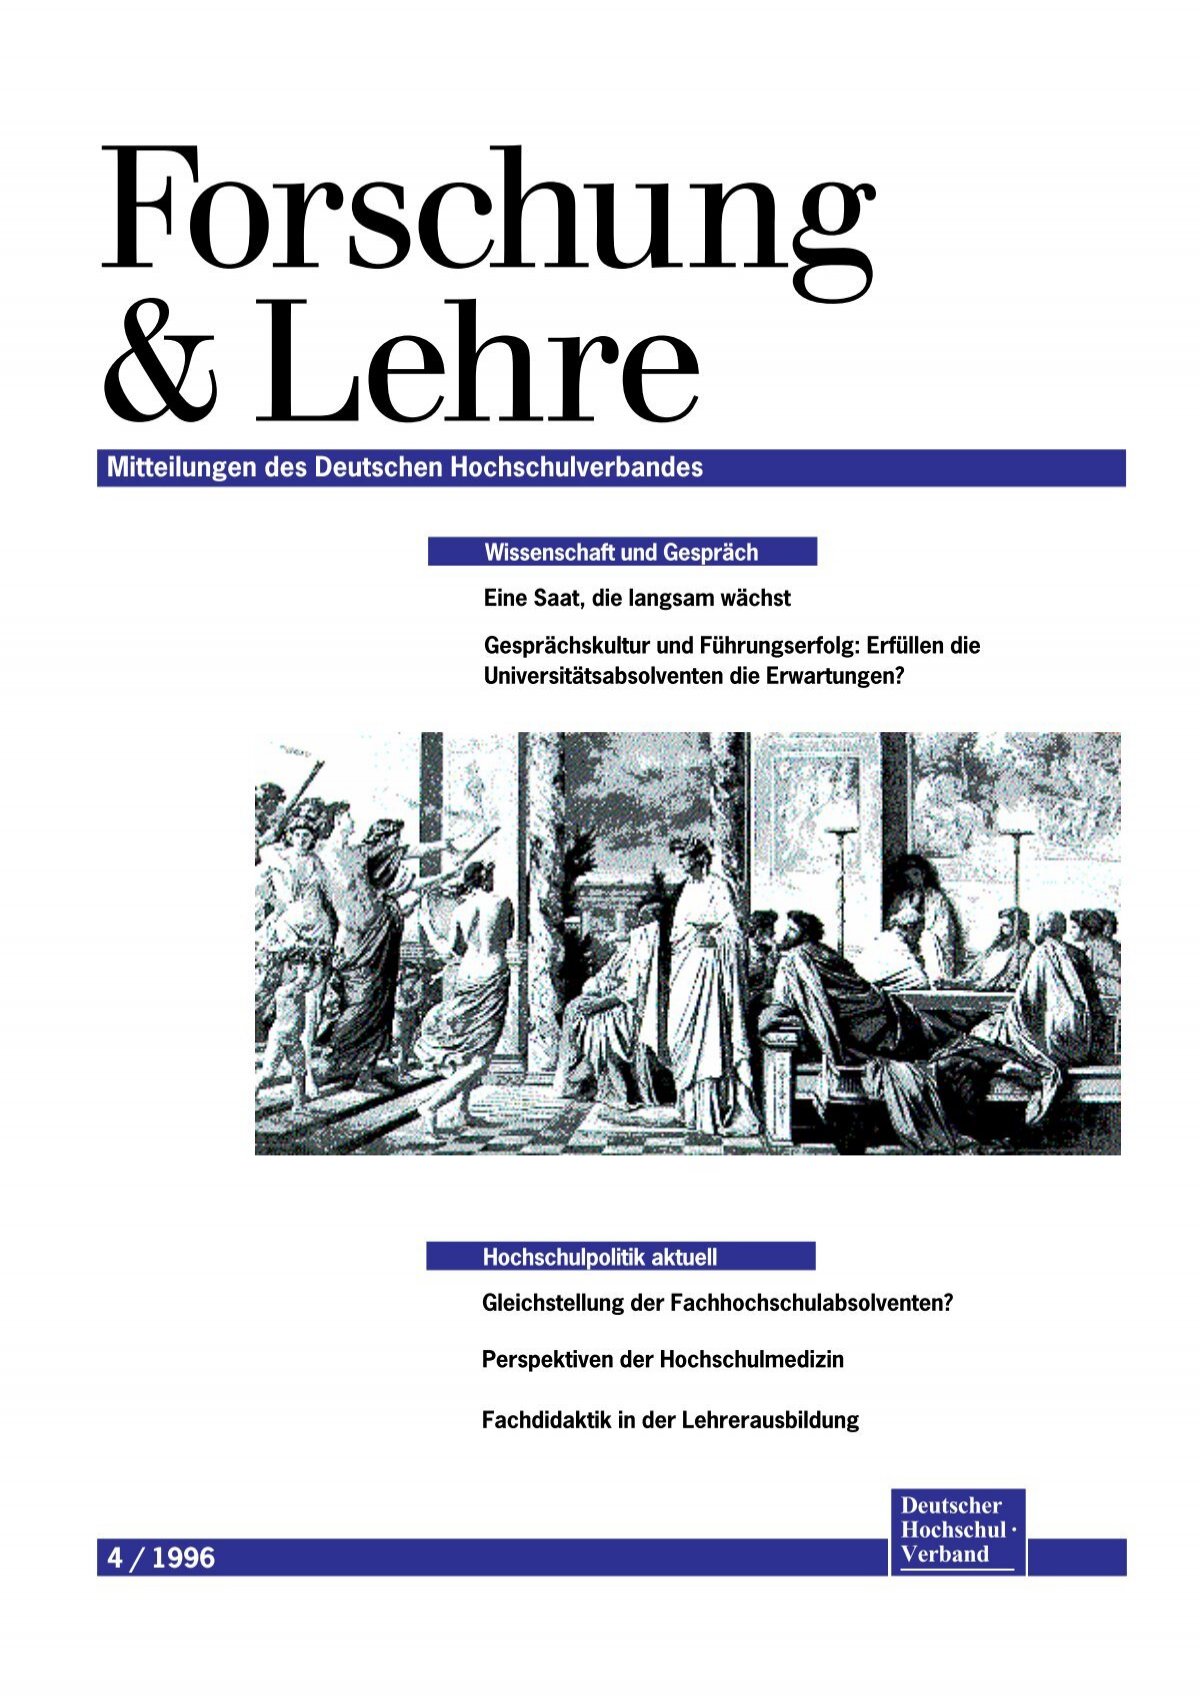 Forschung & Lehre: April 1996